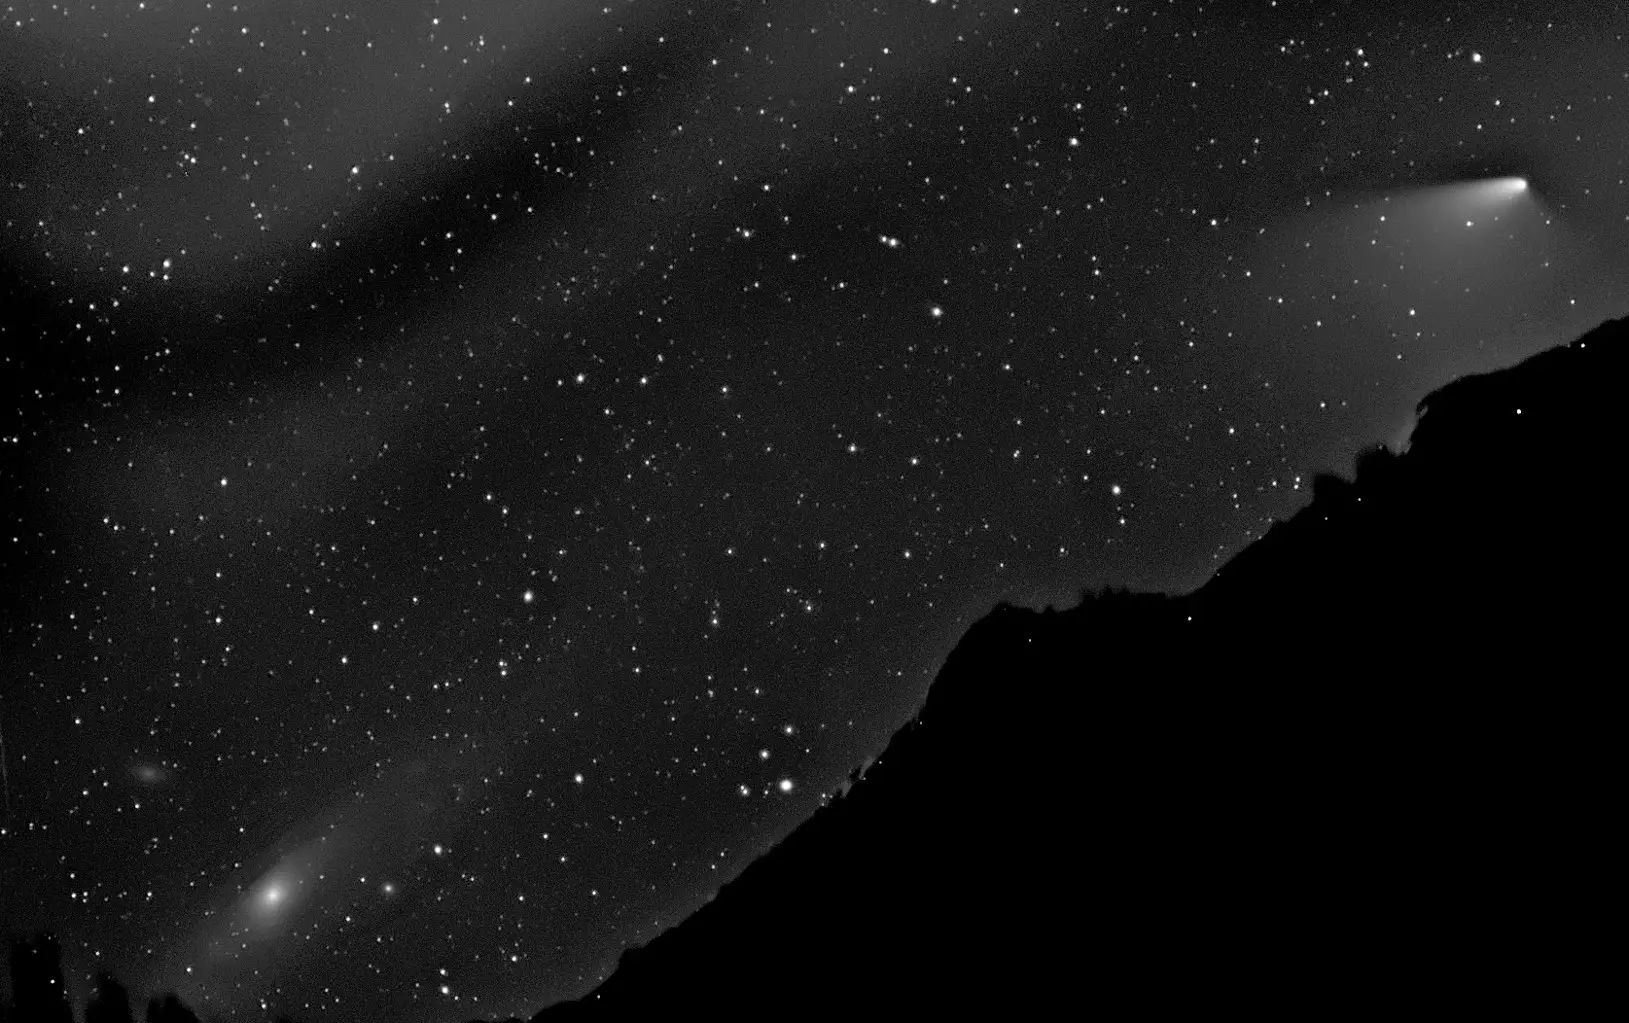 La cometa C/2011 L4 Panstarrs al taglio orbitale